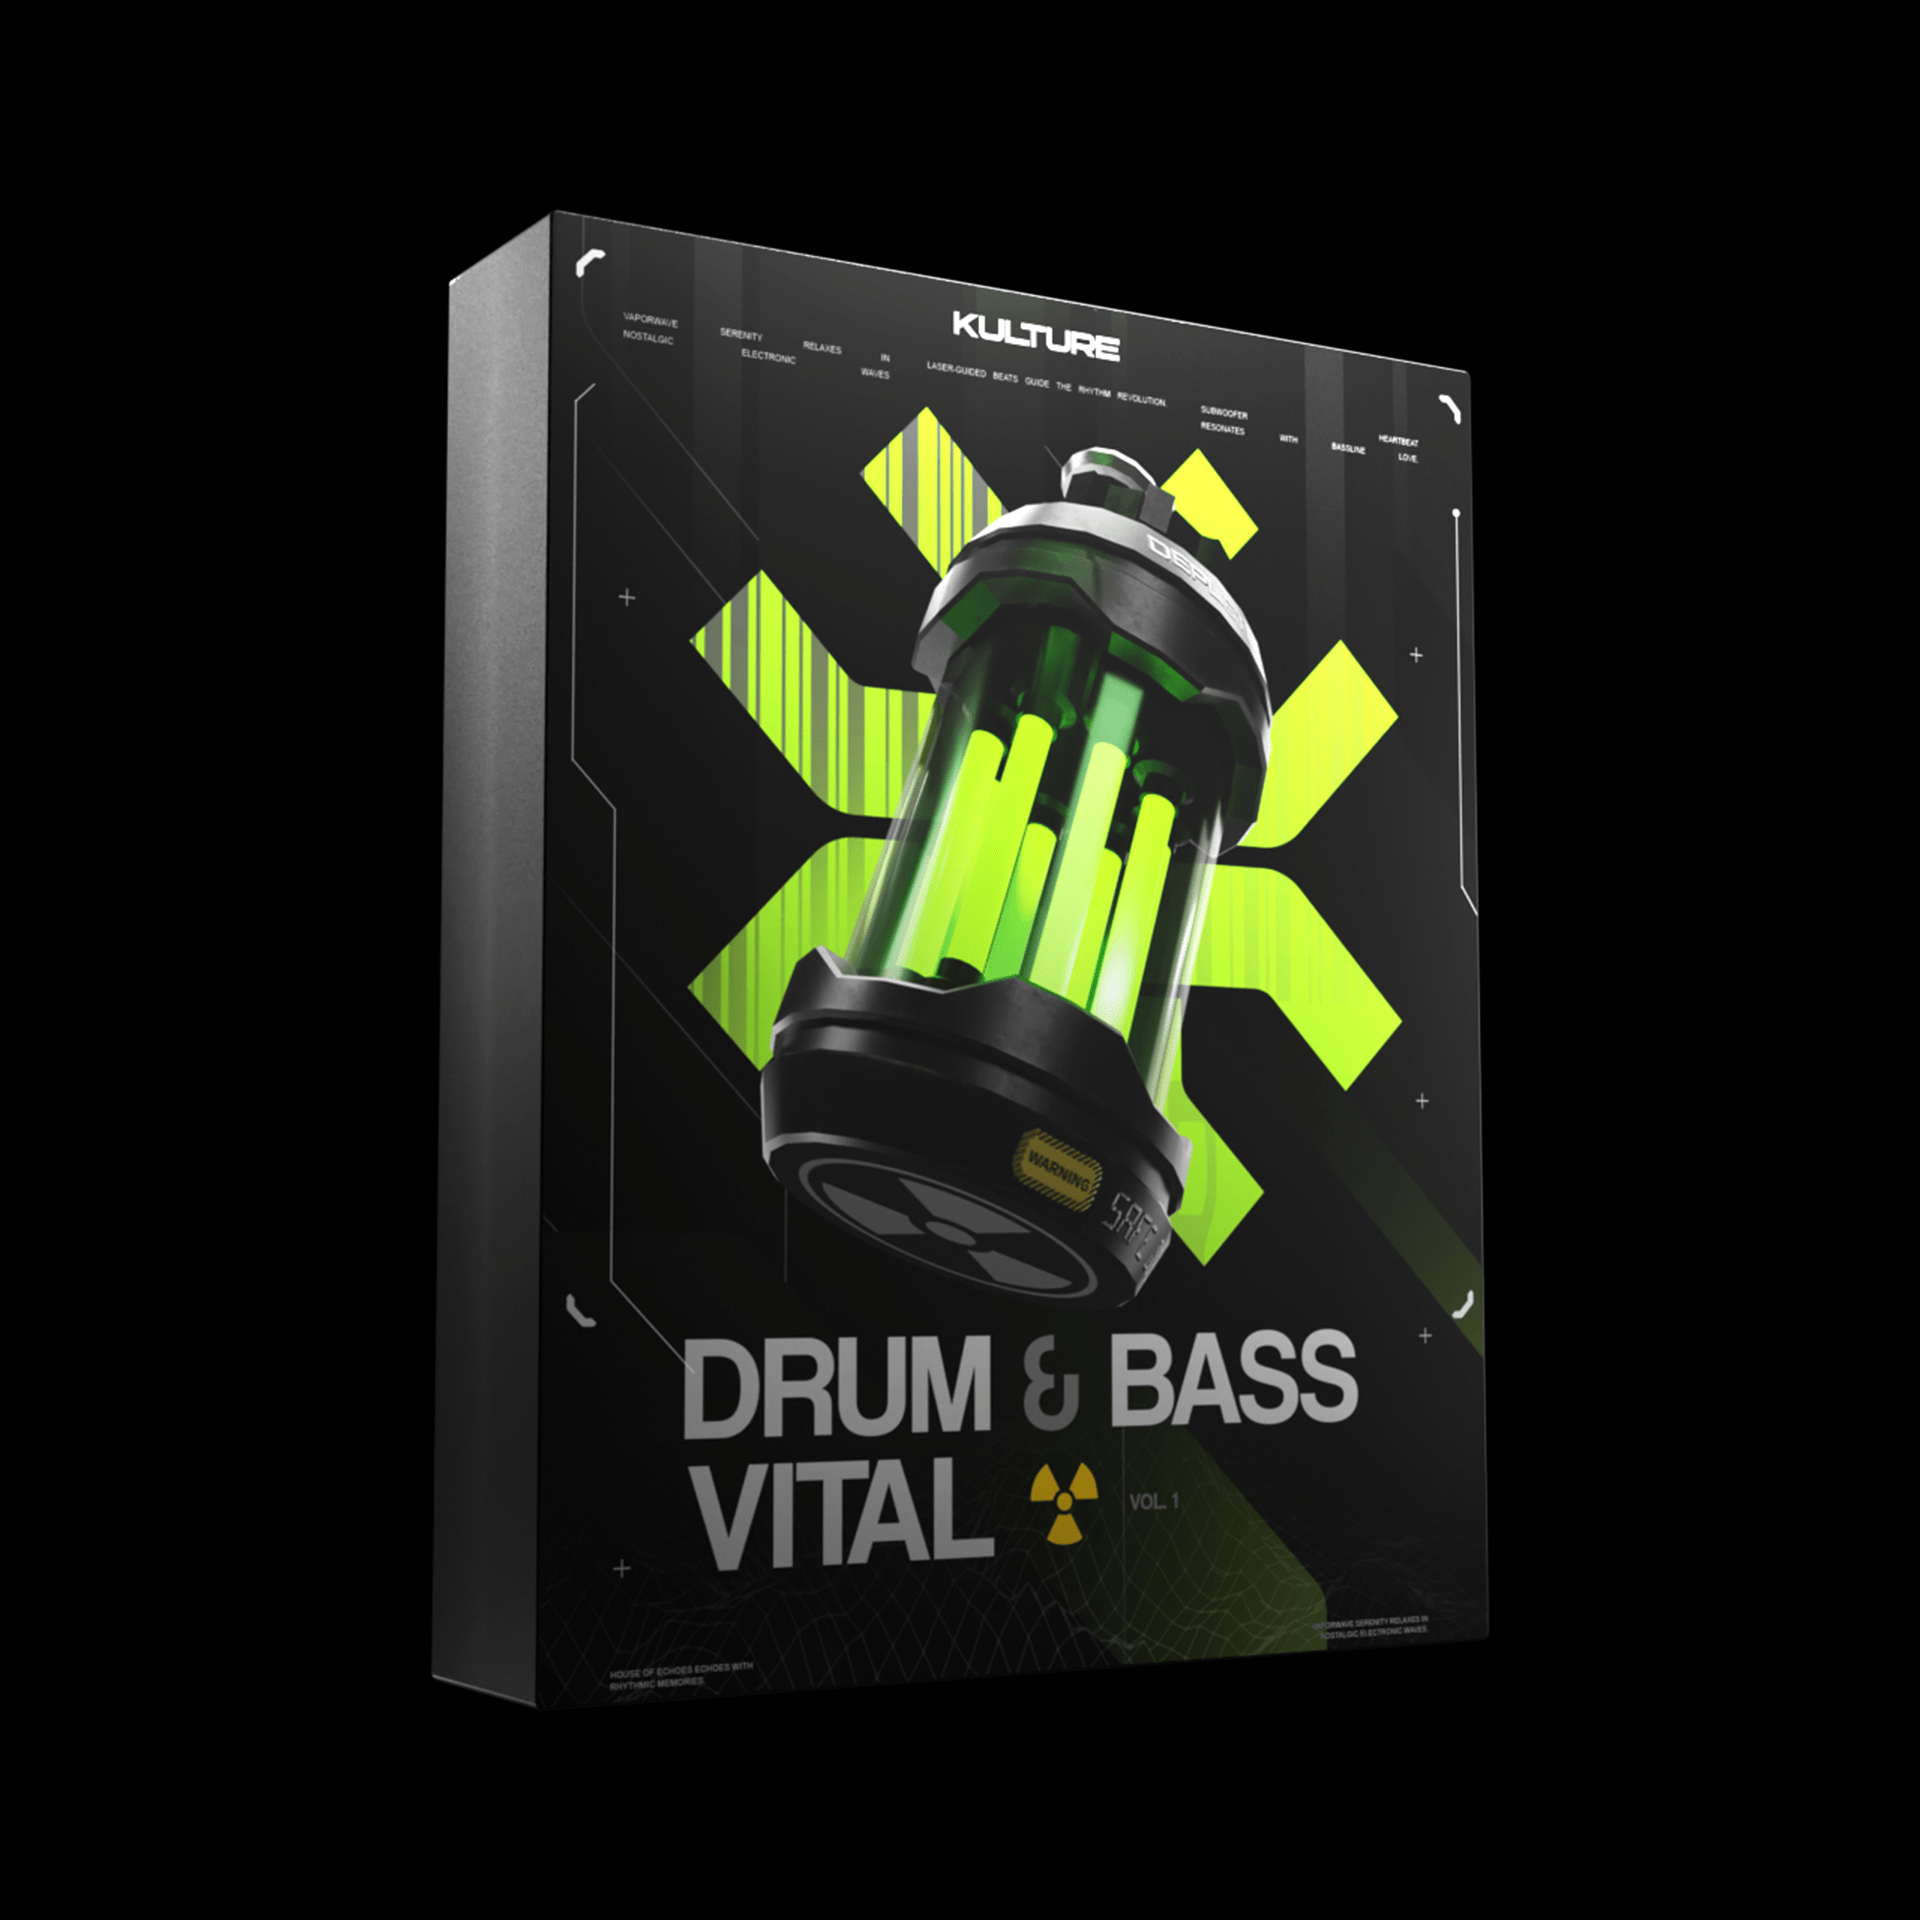 Drum & Bass Vital Presets (Vol. 1)